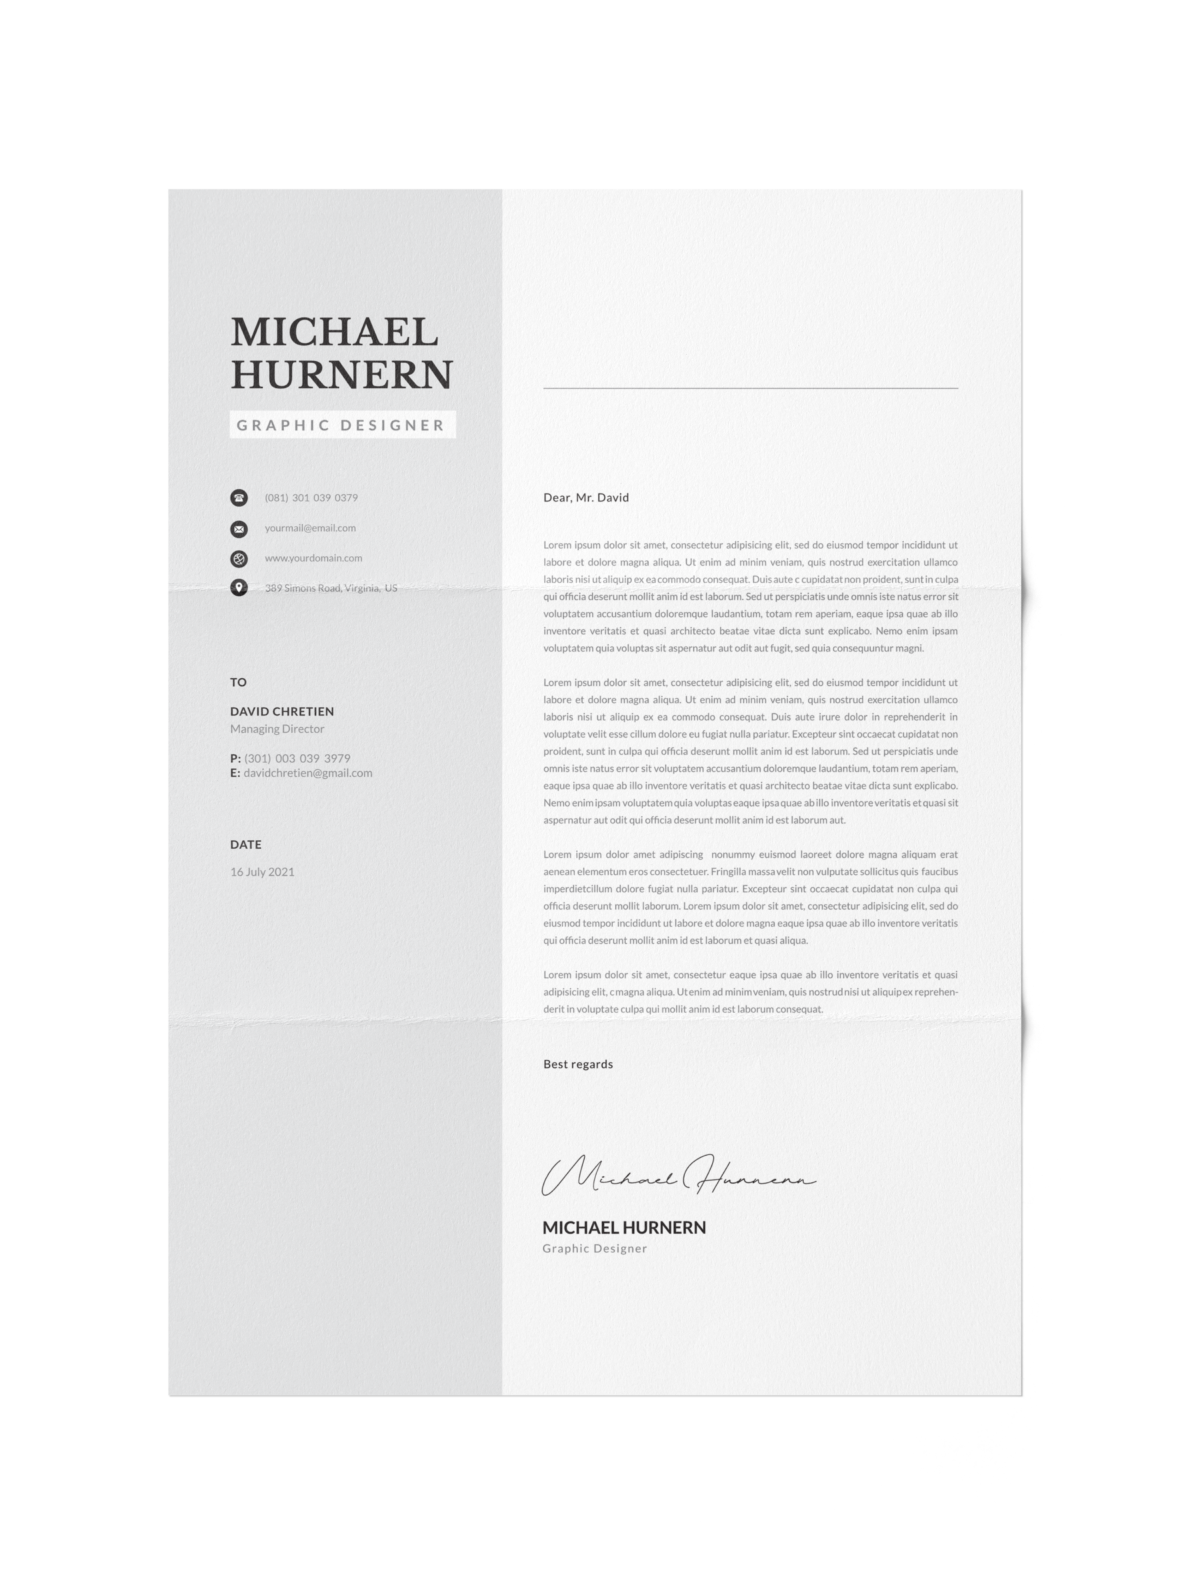 CV #83 Michael Hurnern